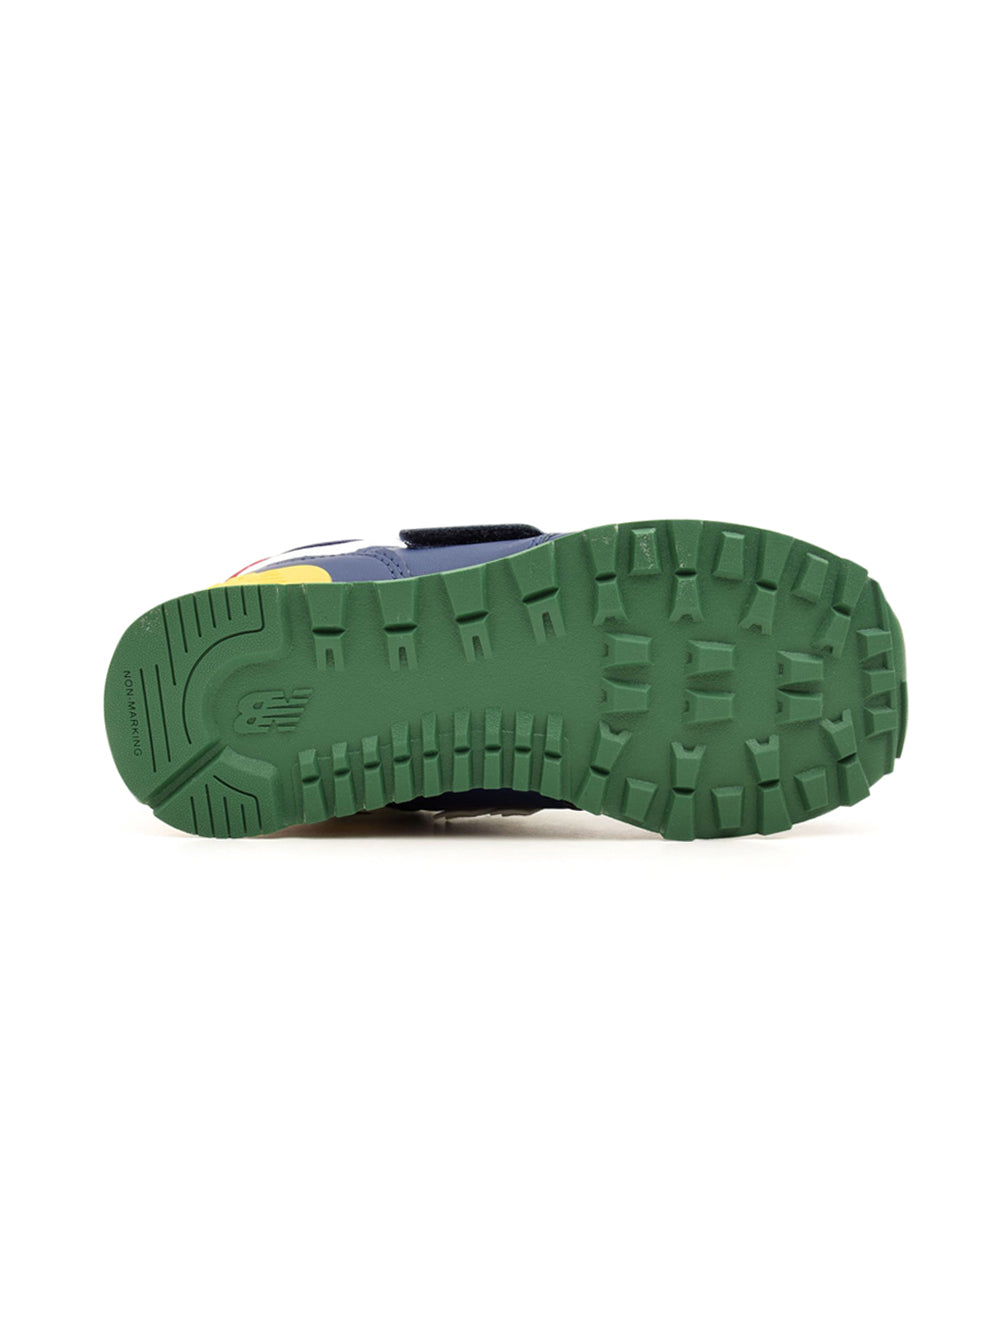 Outletsanmichele | Low Outlet Balance Sanmichele PV574 New – Kind Blau Sneakers